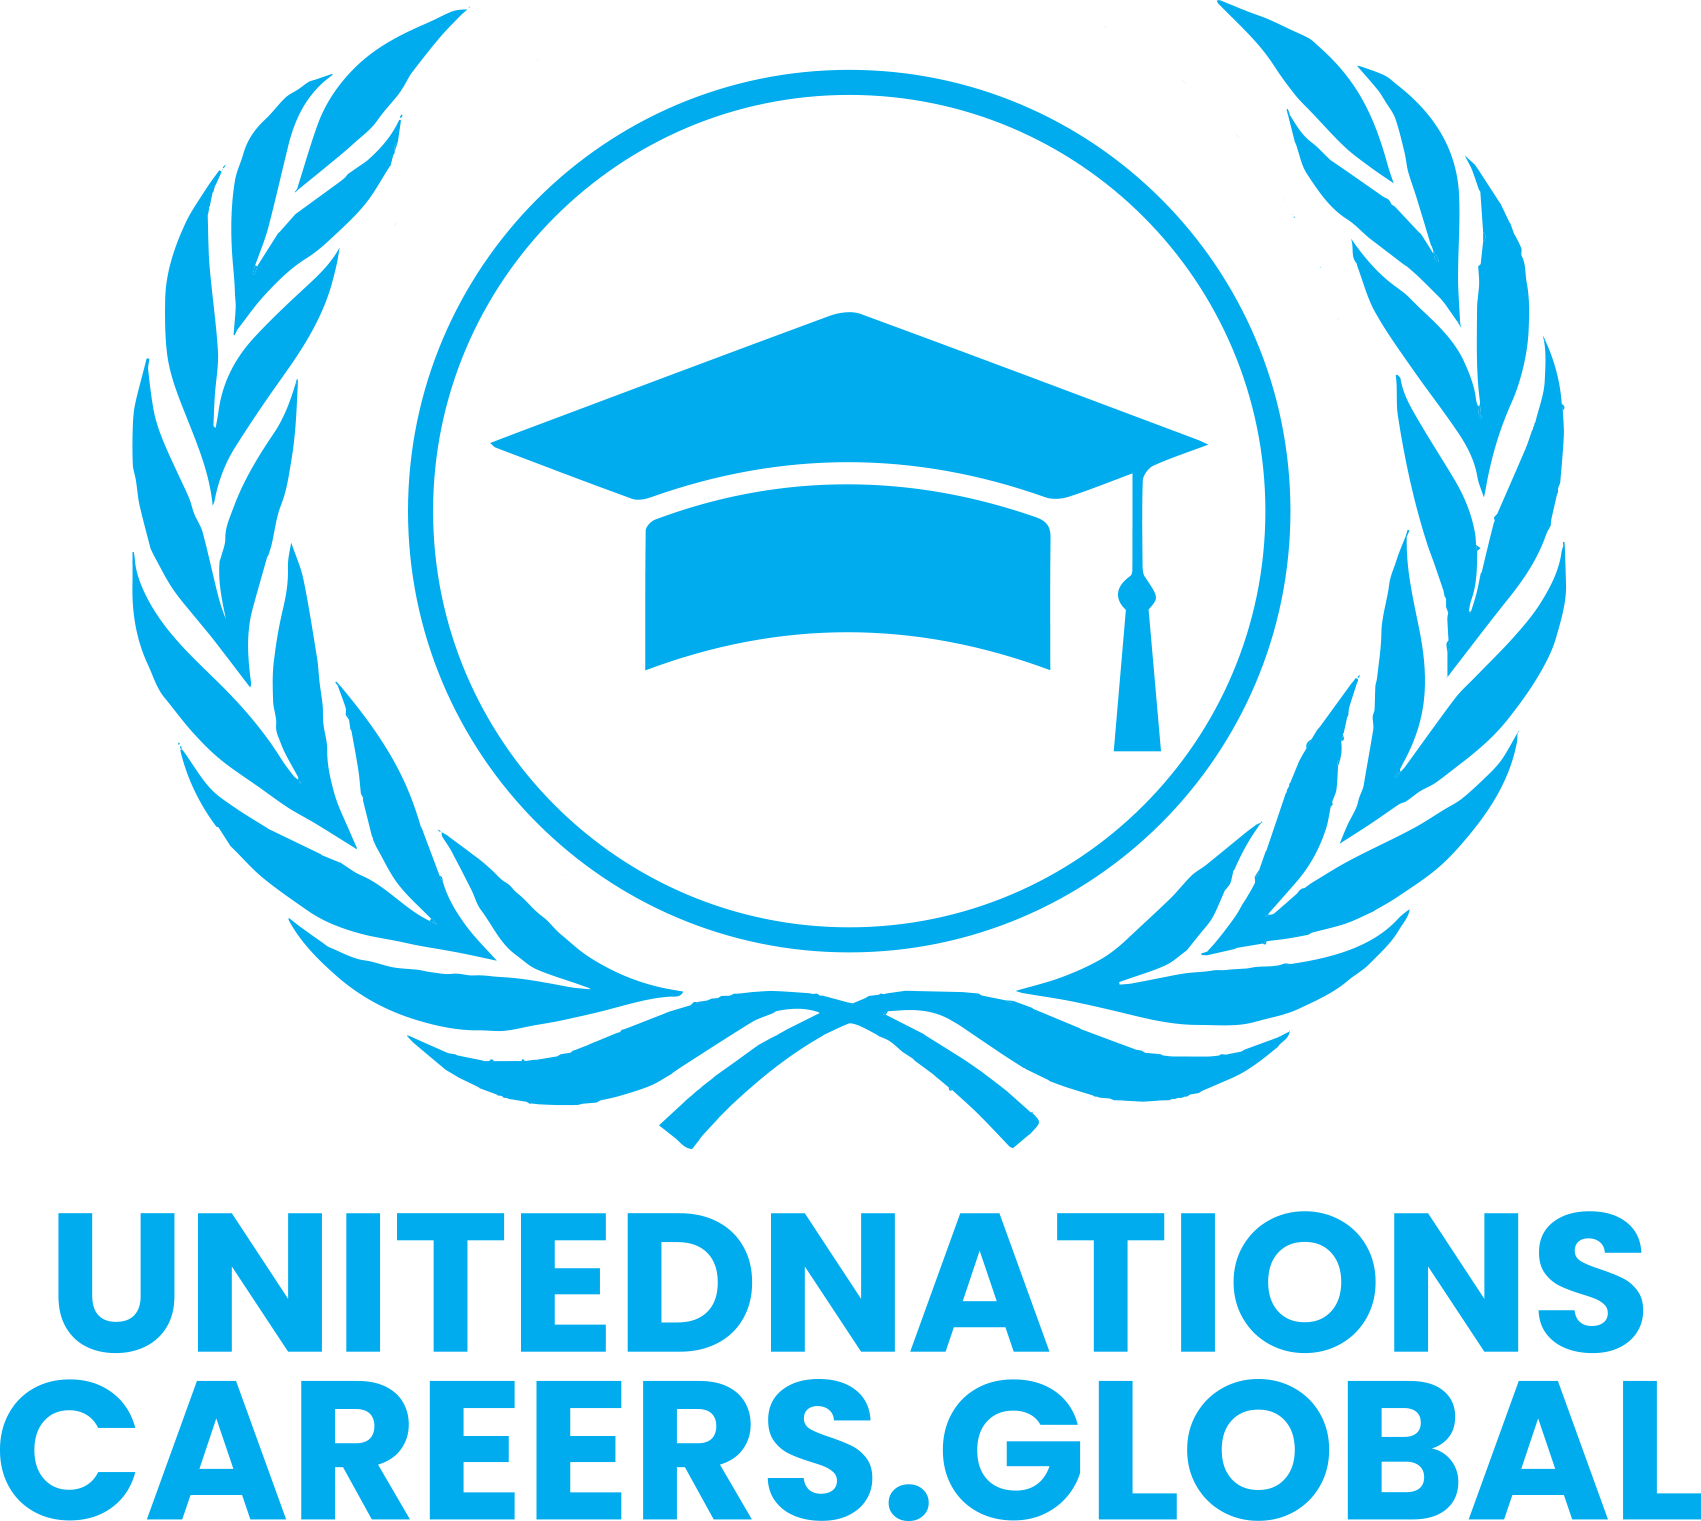 United Nations Careers. Global